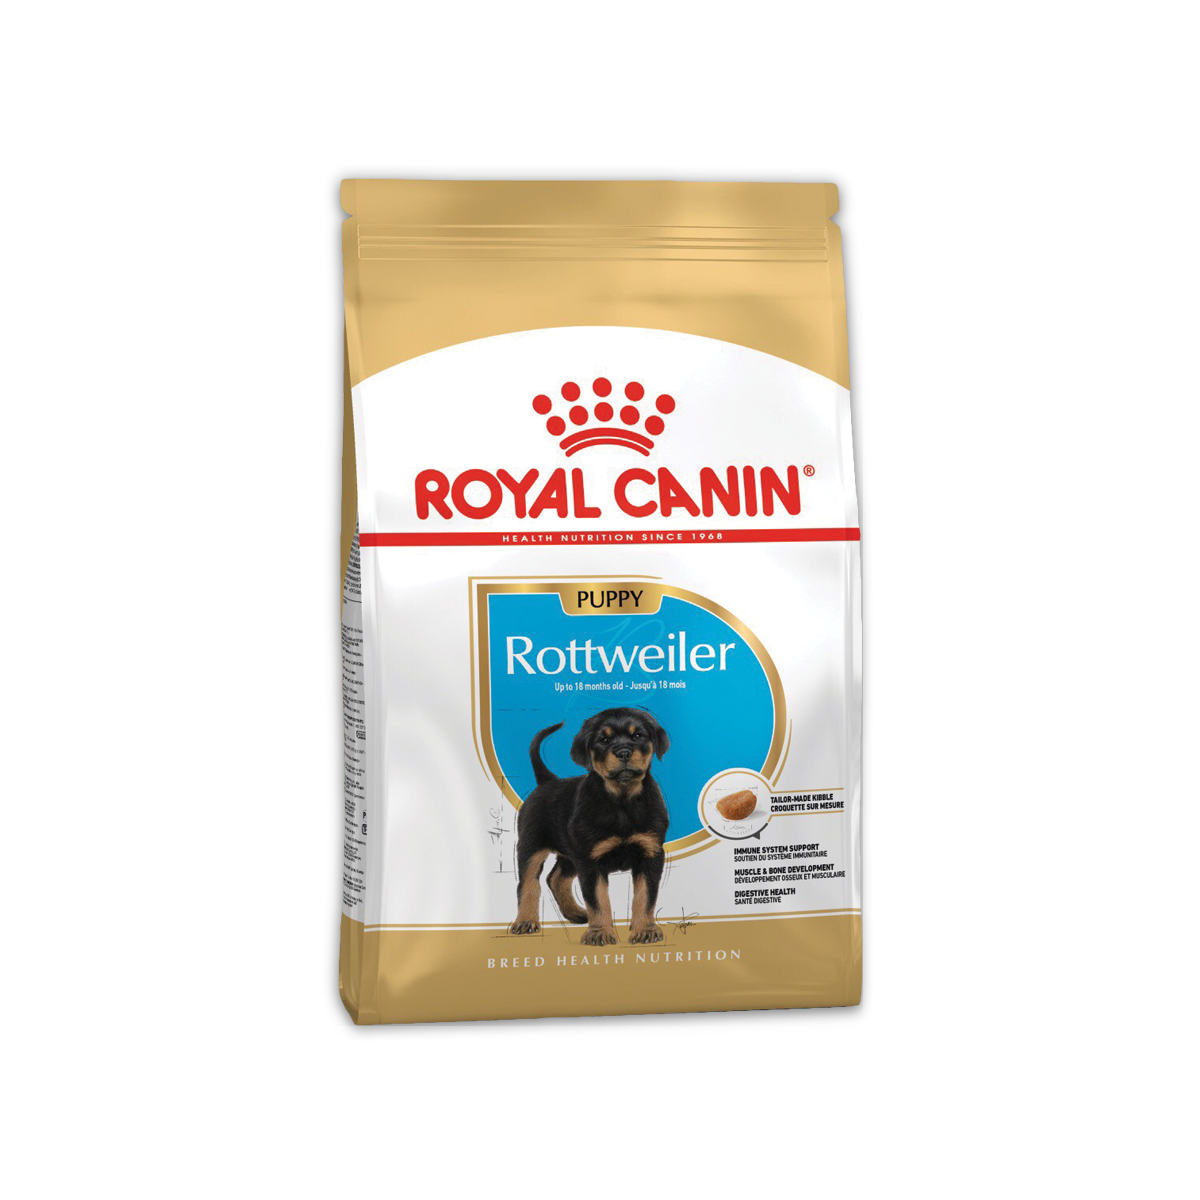 Royal Canin Rottweiler Puppy โรยัล คานิน อาหารสำหรับสุนัขโตพันธุ์ พันธุ์ร็อทไวเลอร์ อายุ 2 - 18 เดือน